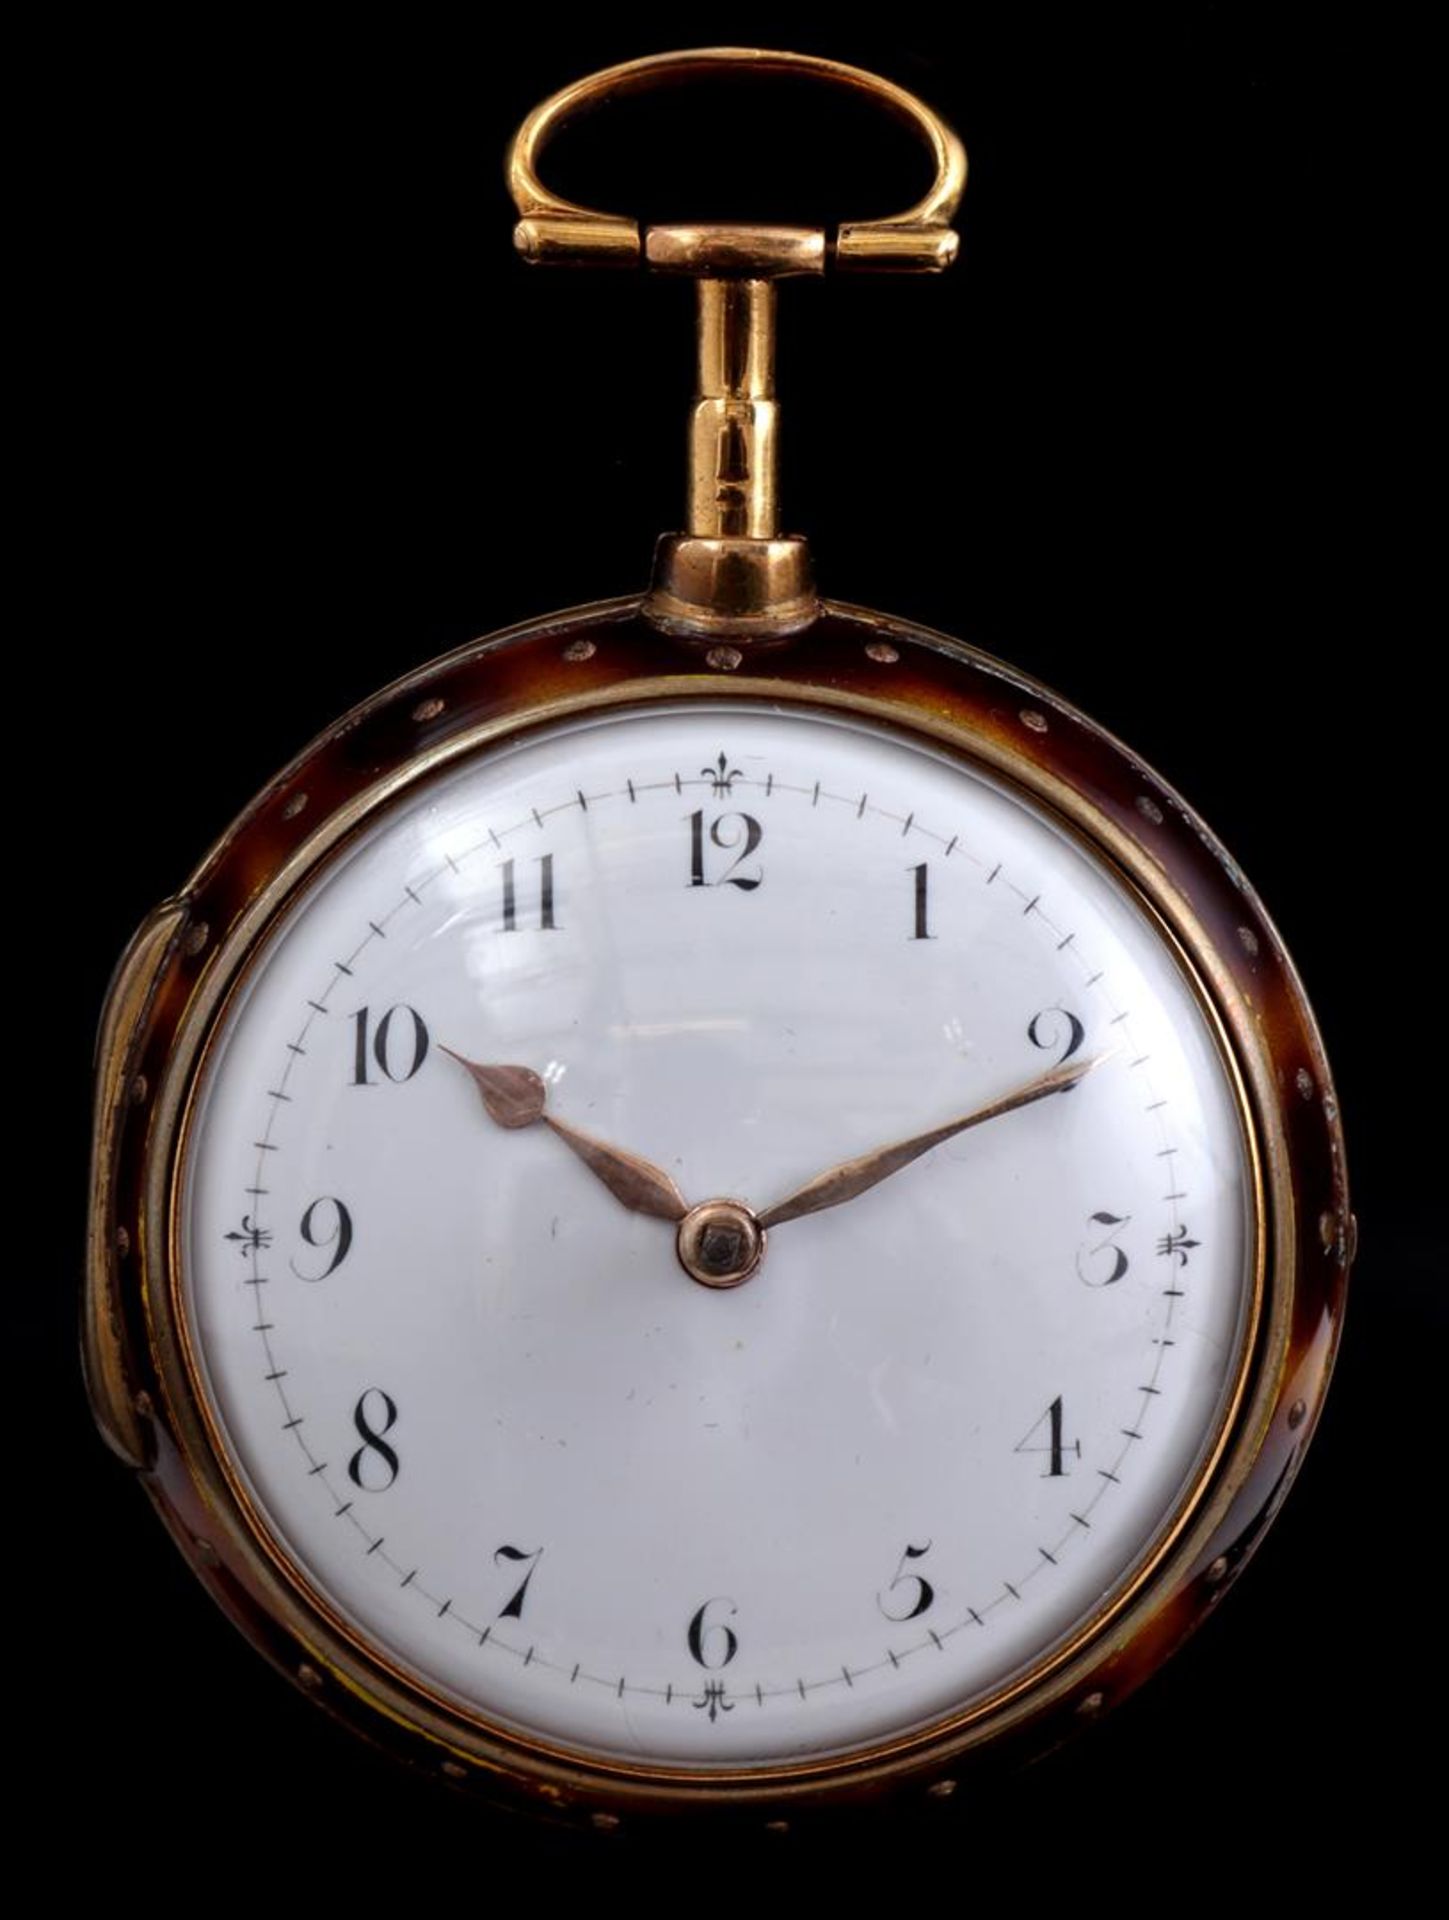 18th century pocket watch